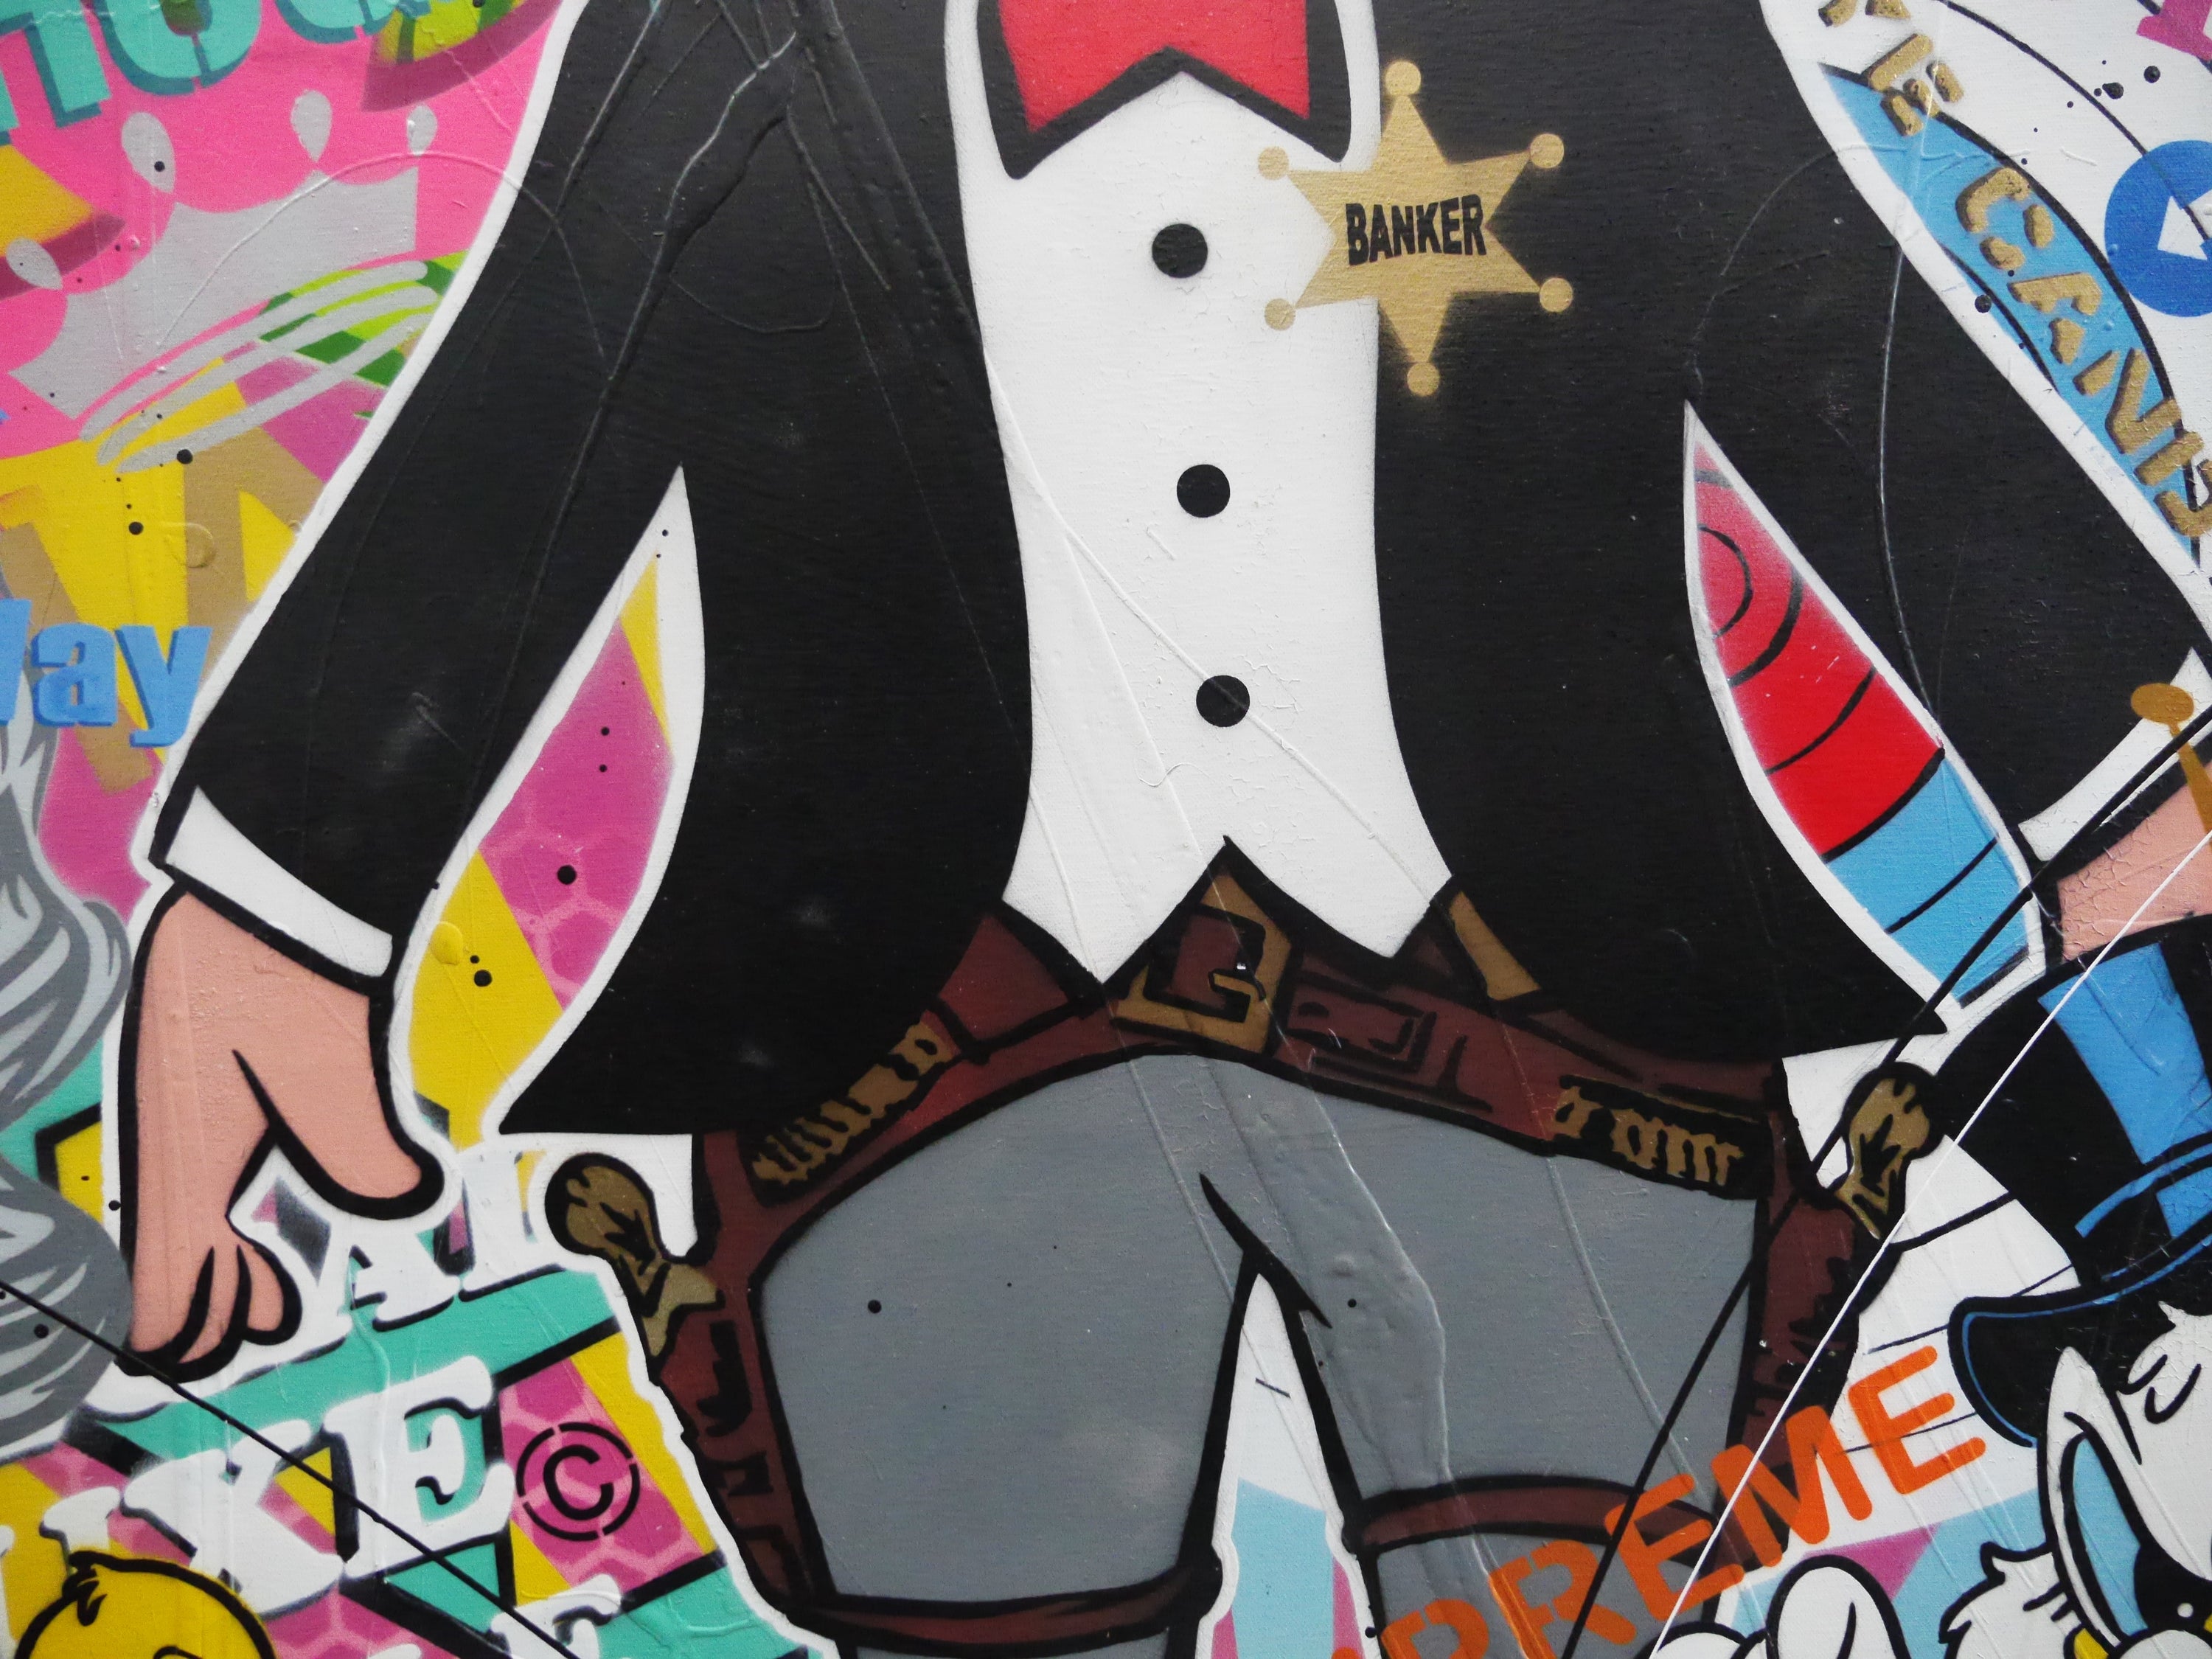 The Banker 140cm x 100cm Monopoly Man Textured Urban Pop Art Painting (SOLD)